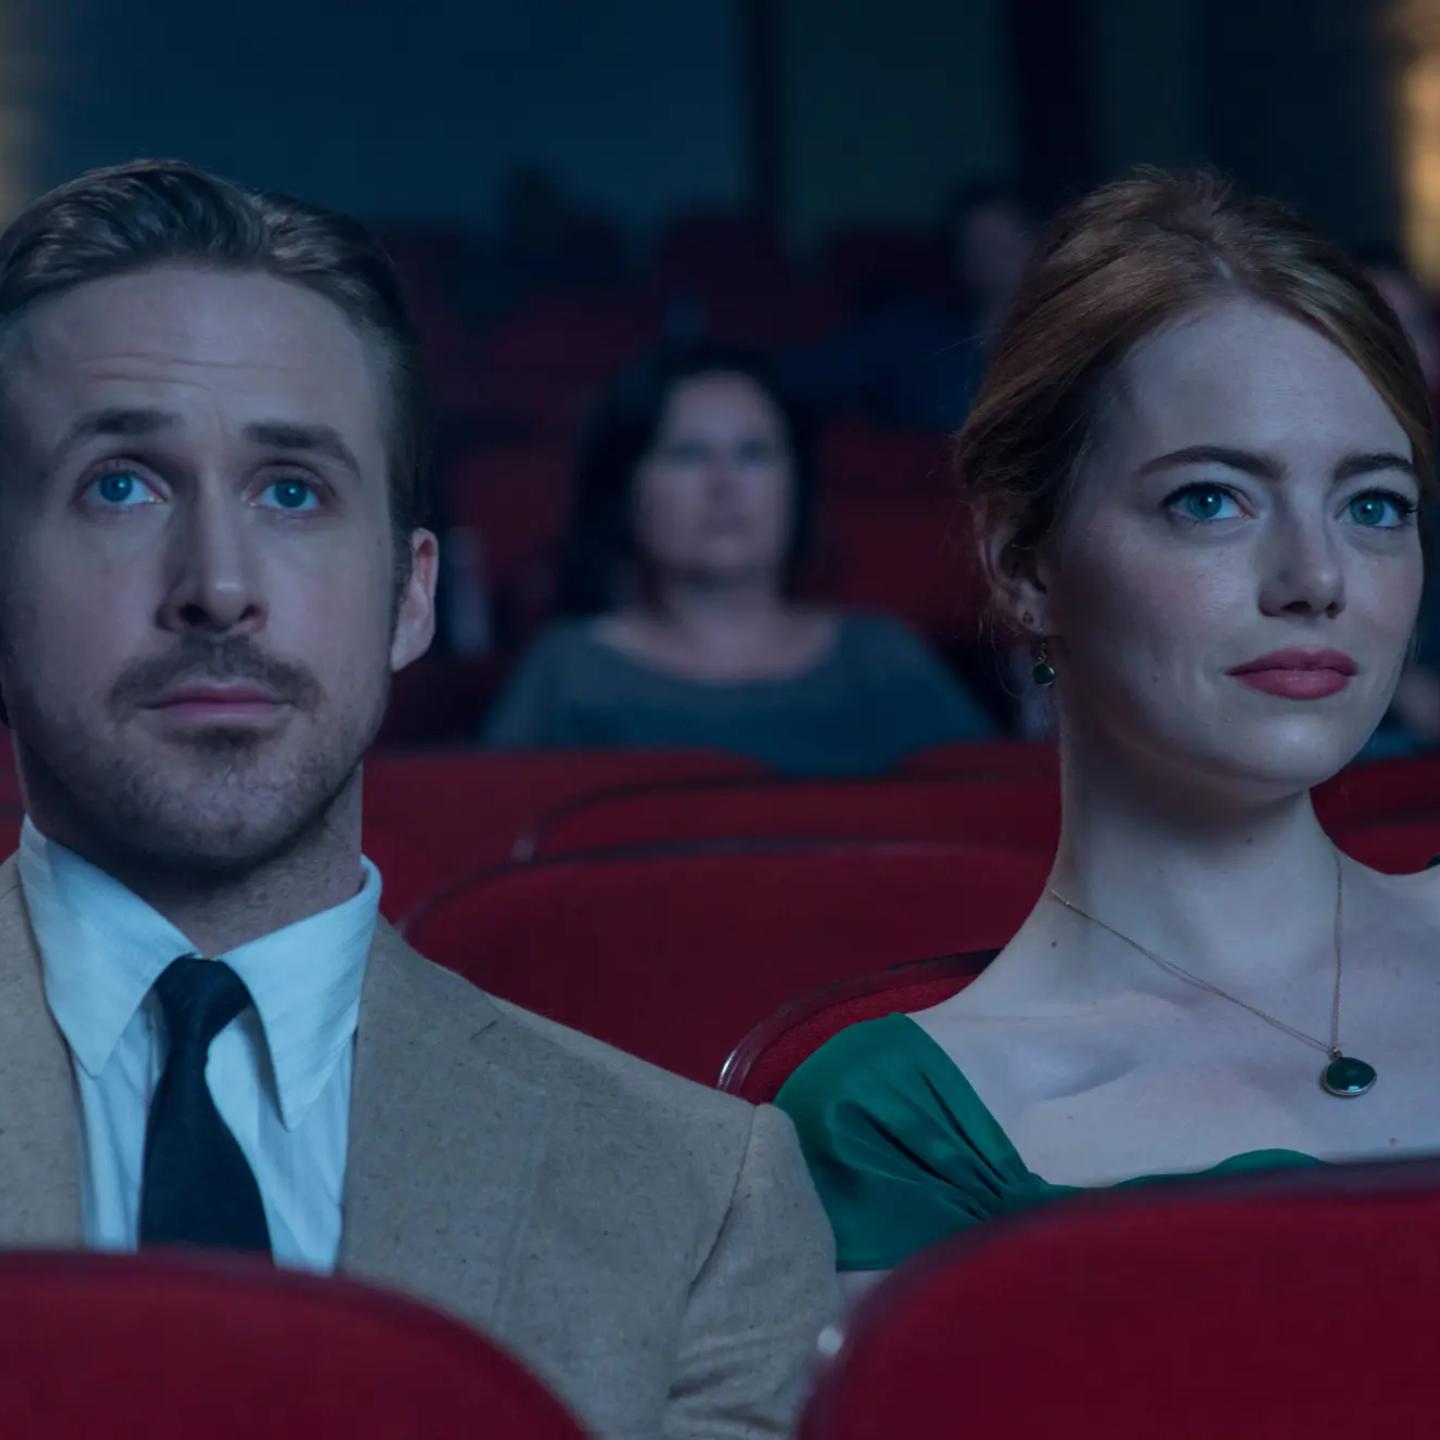 Ryan Gosling, Emma Stone et al. sitting in a theater